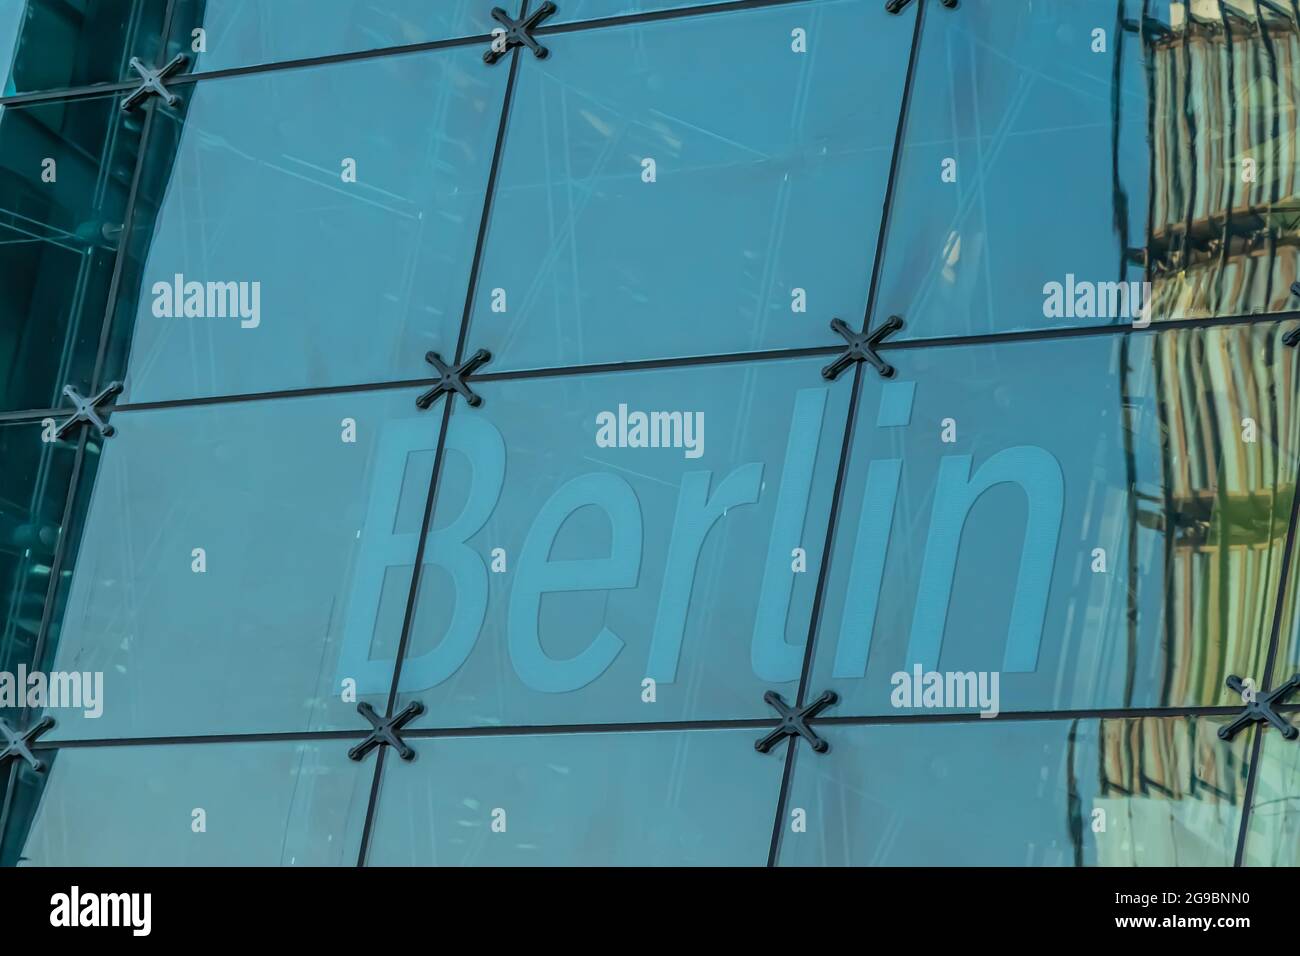 Berlin, Germany - July 25, 2019: Central train station in Berlin. Berlin - Hauptbahnhof. Modern glass architecture Stock Photo